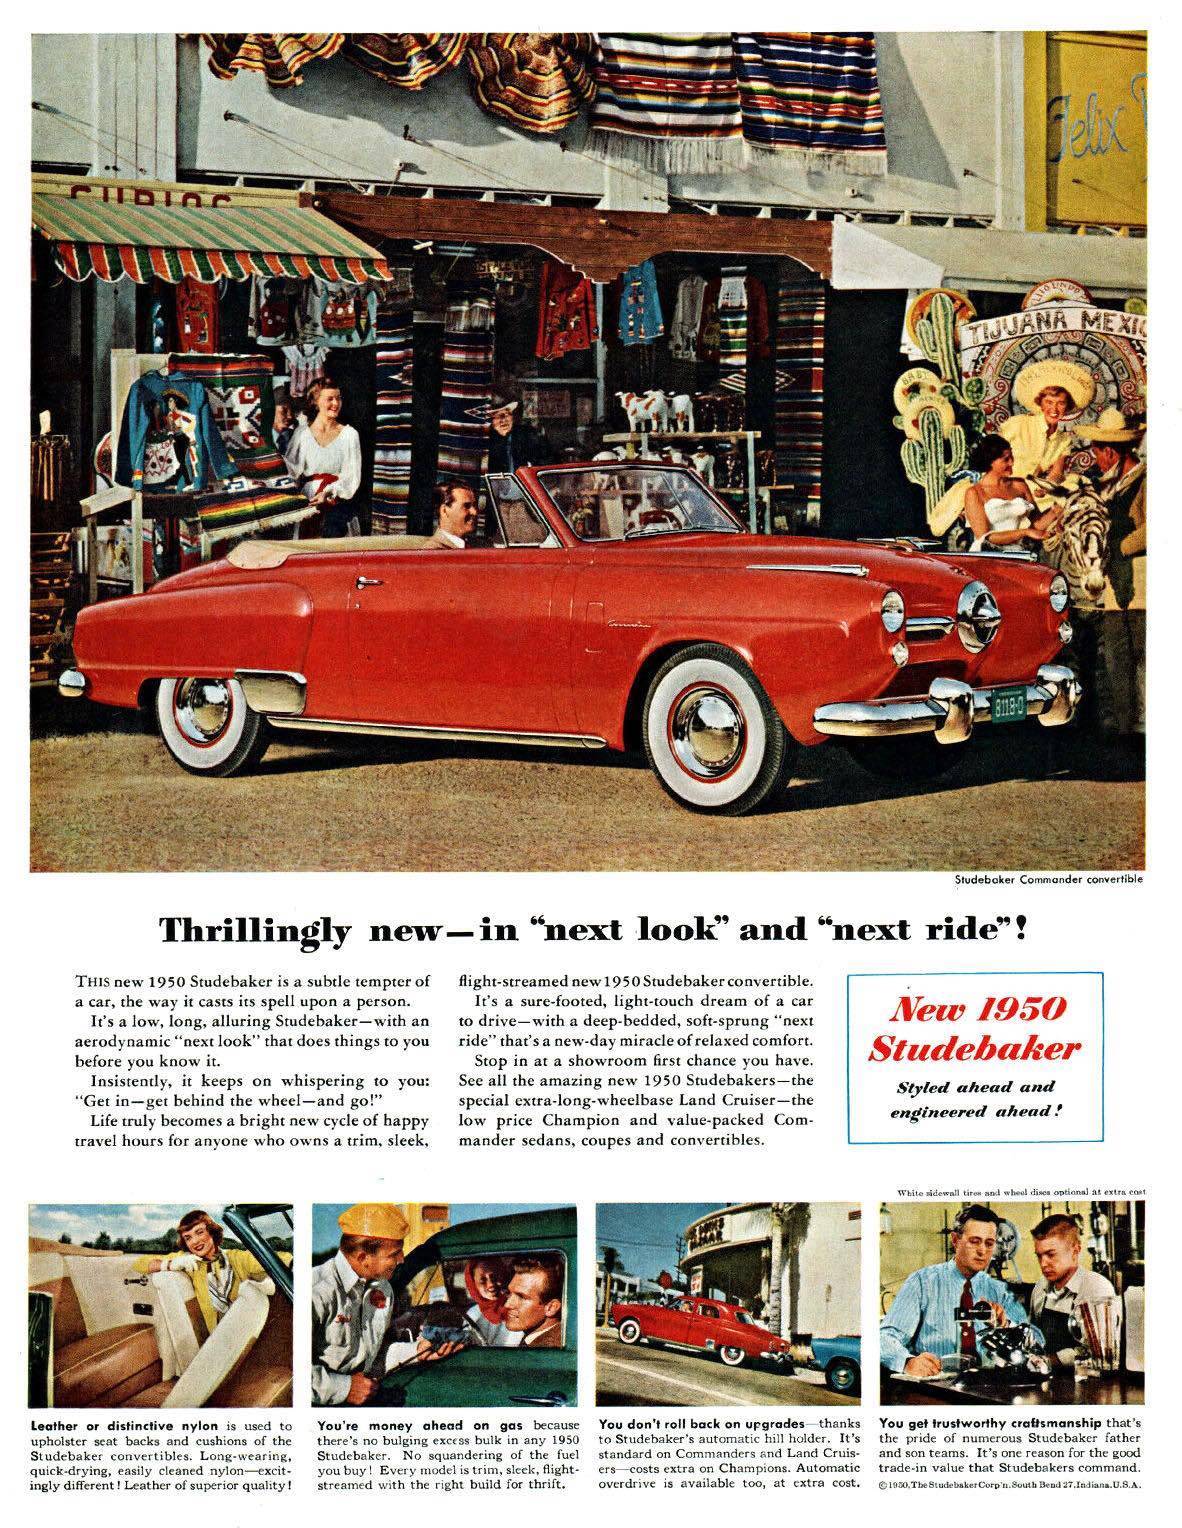 The Studebaker Corp, 1950